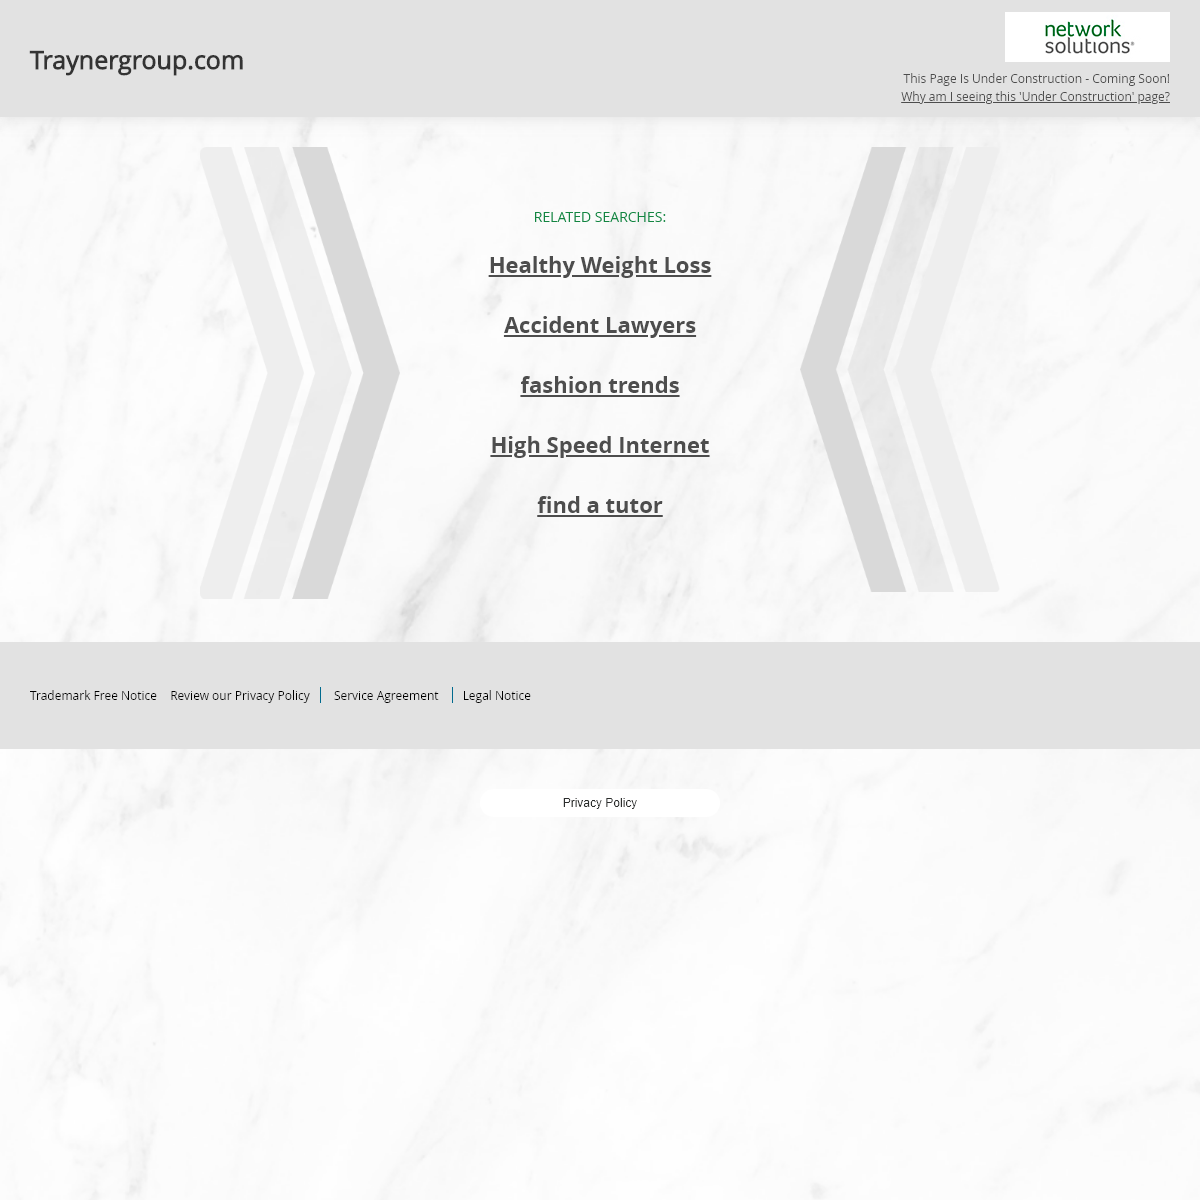 A complete backup of traynergroup.com